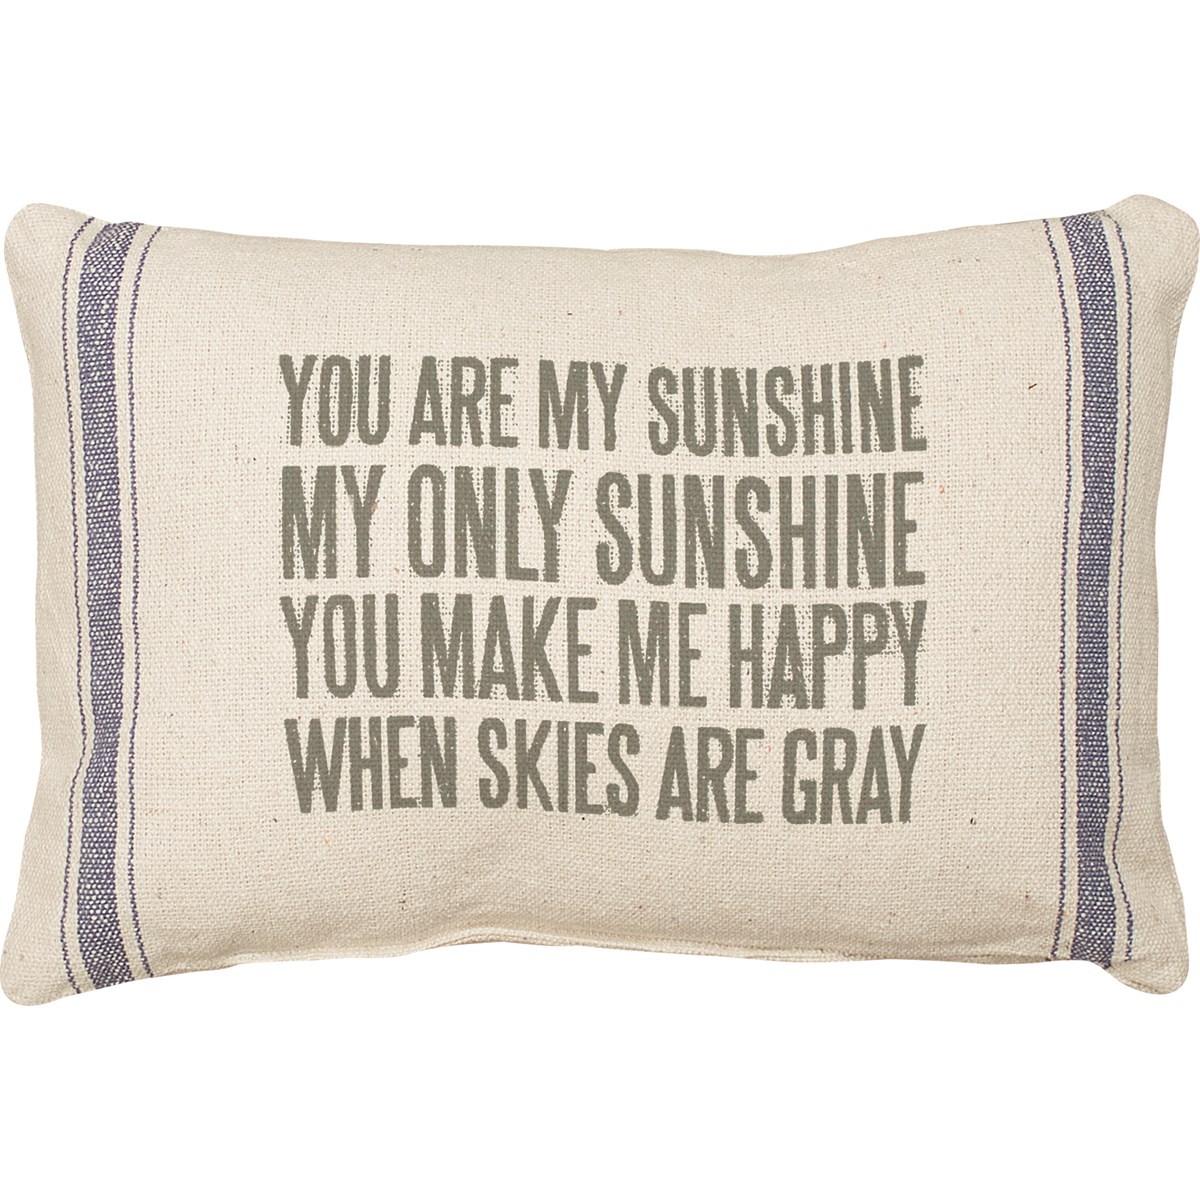 Pillow - You Are My Sunshine - 15" x 10" - Cotton, Zipper